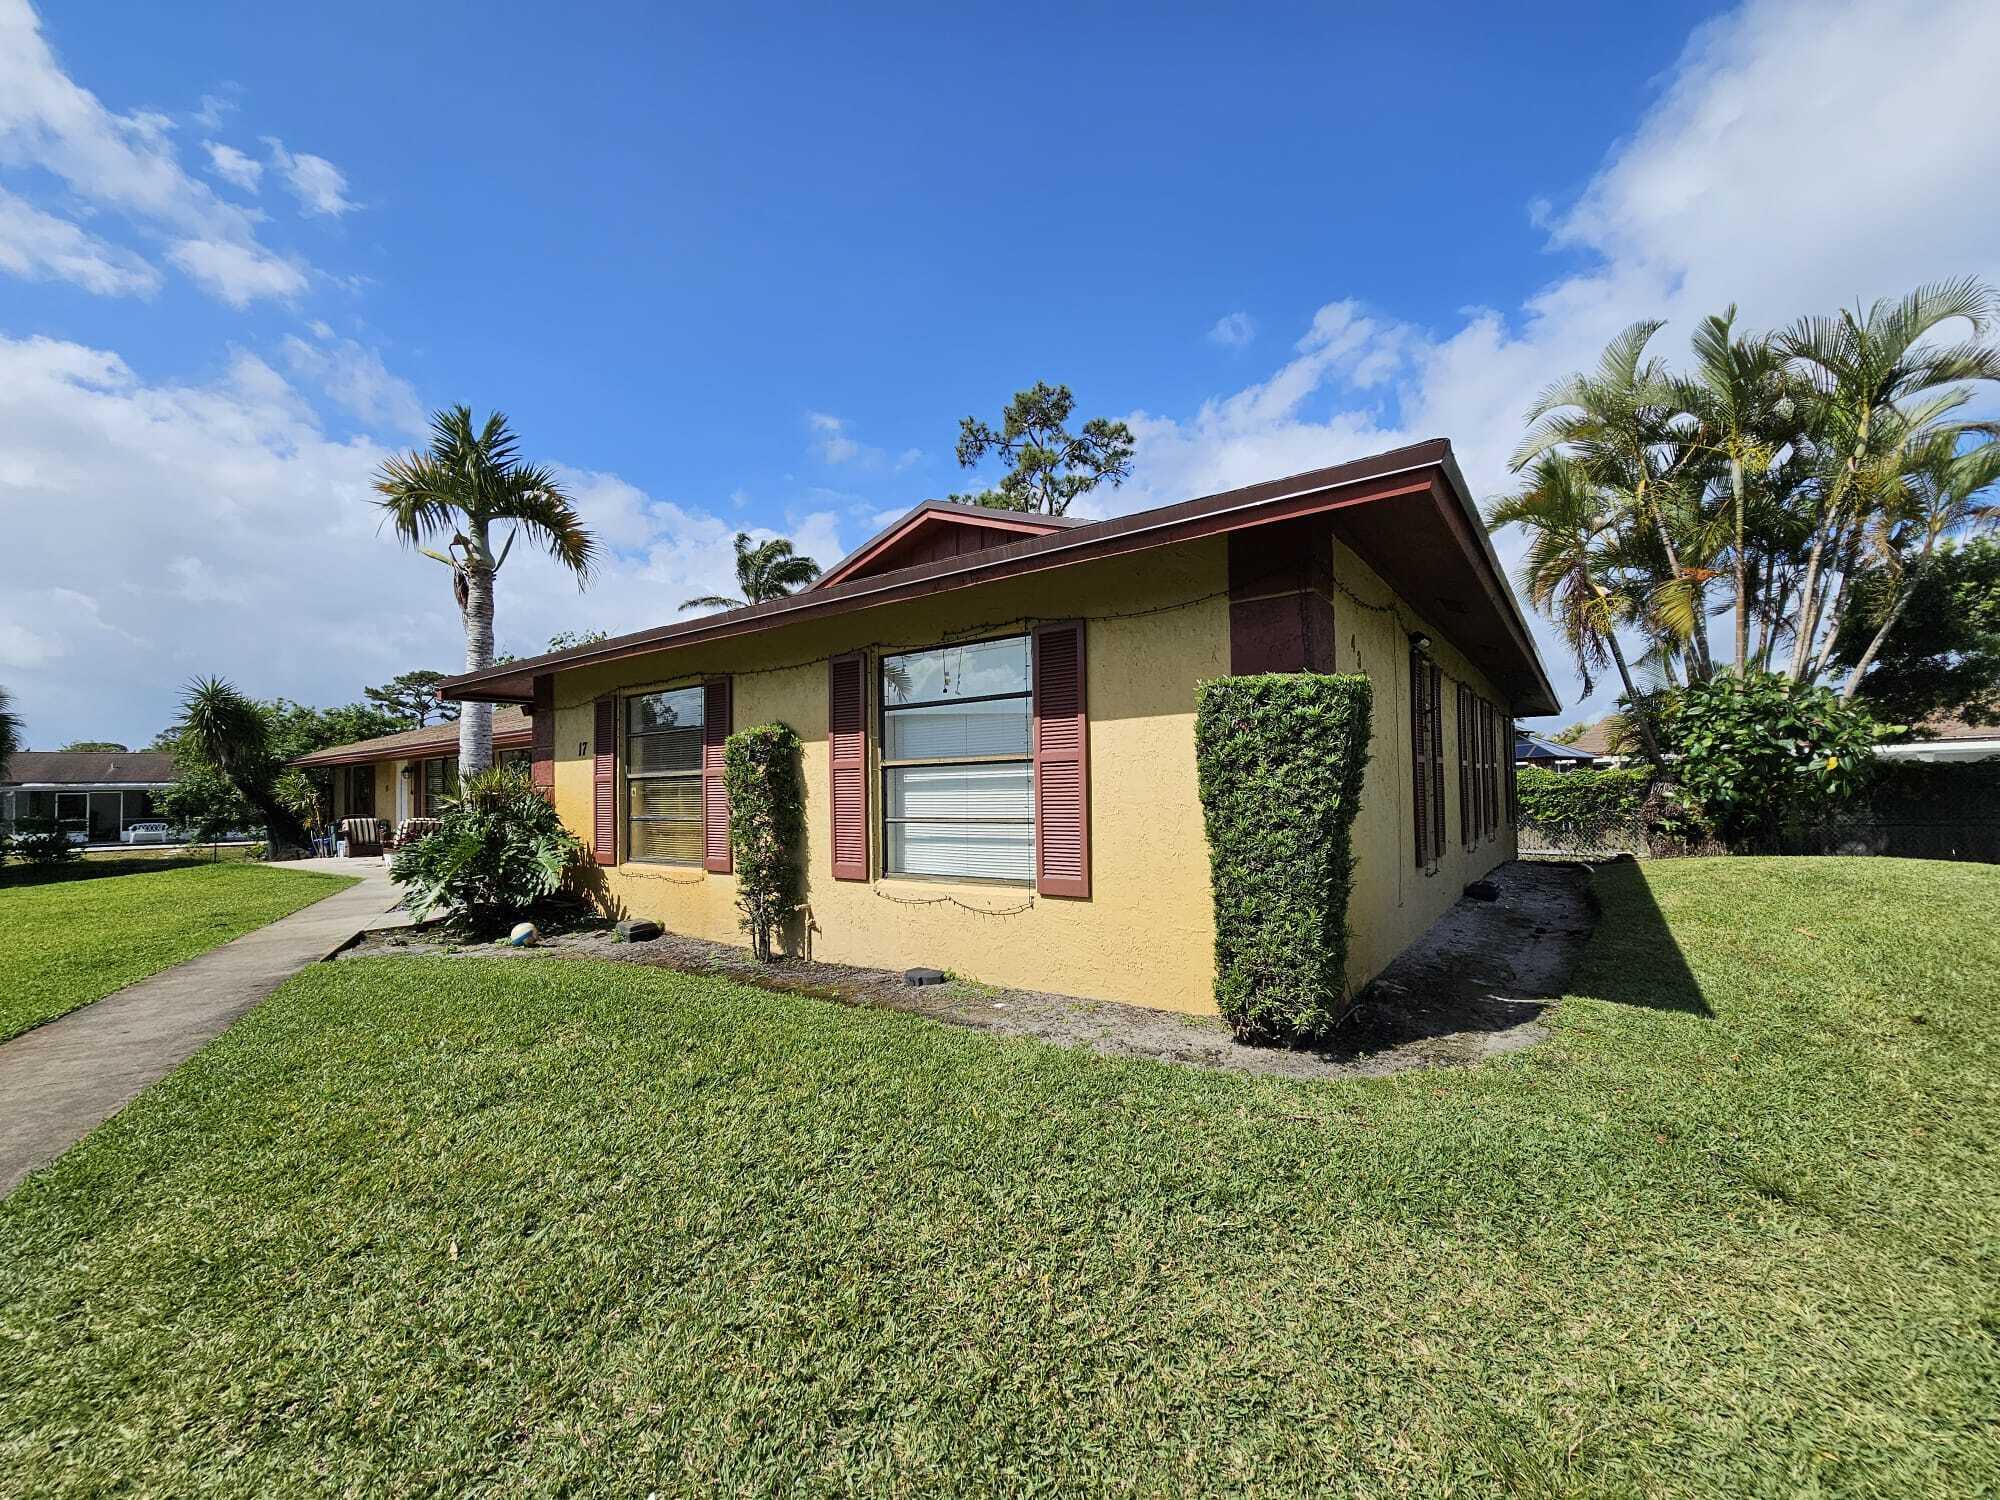 Property for Sale at 4339 Royal Banyan Way C, Lake Worth, Palm Beach County, Florida - Bedrooms: 2 
Bathrooms: 1  - $259,000